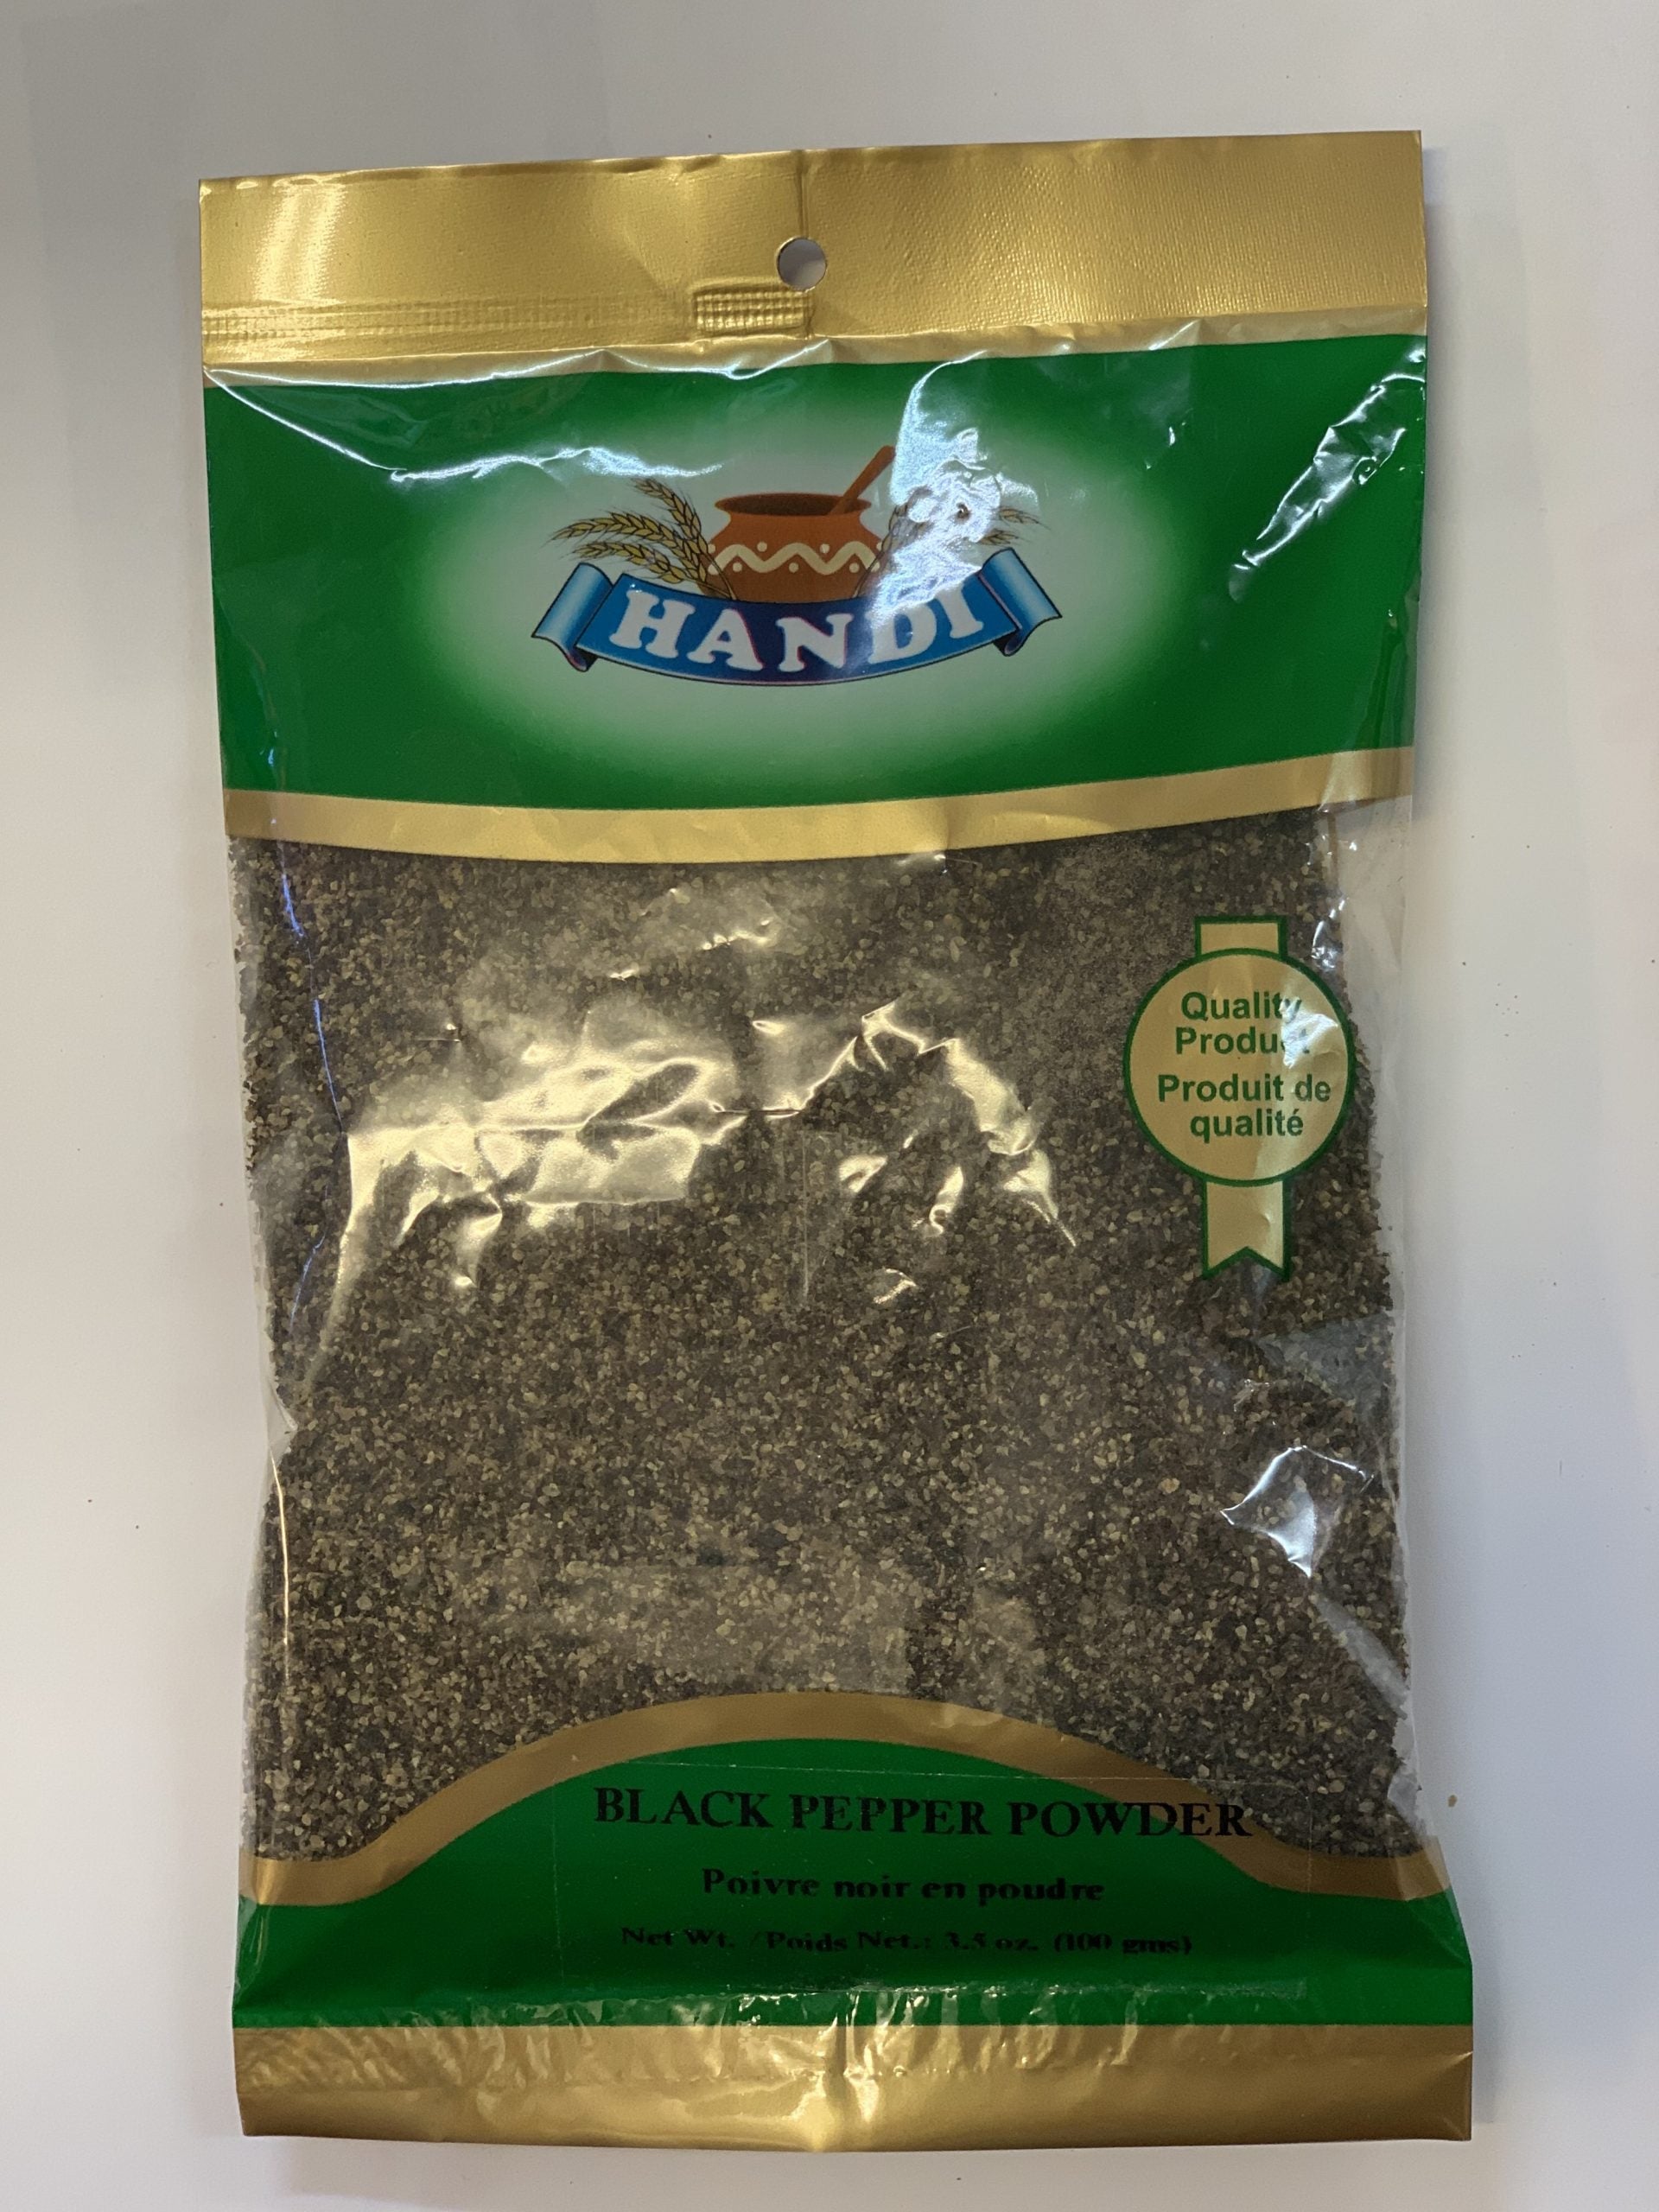 Handi - Black Pepper Powder 100g